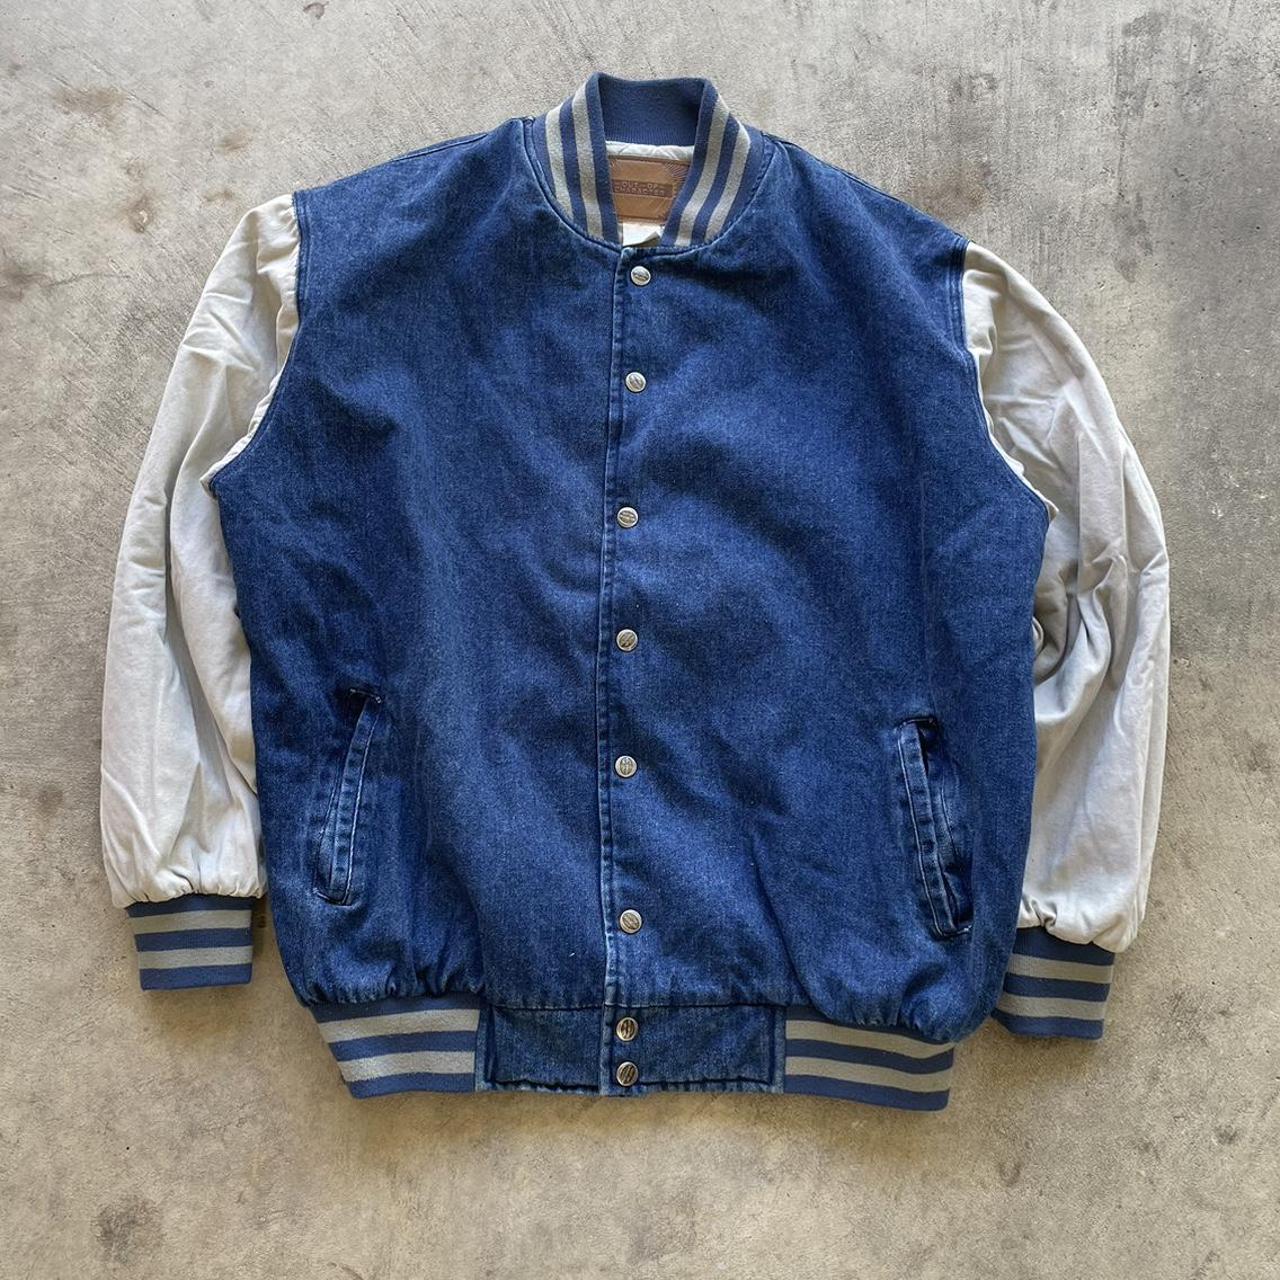 American Vintage Men's Blue and Cream Jacket | Depop